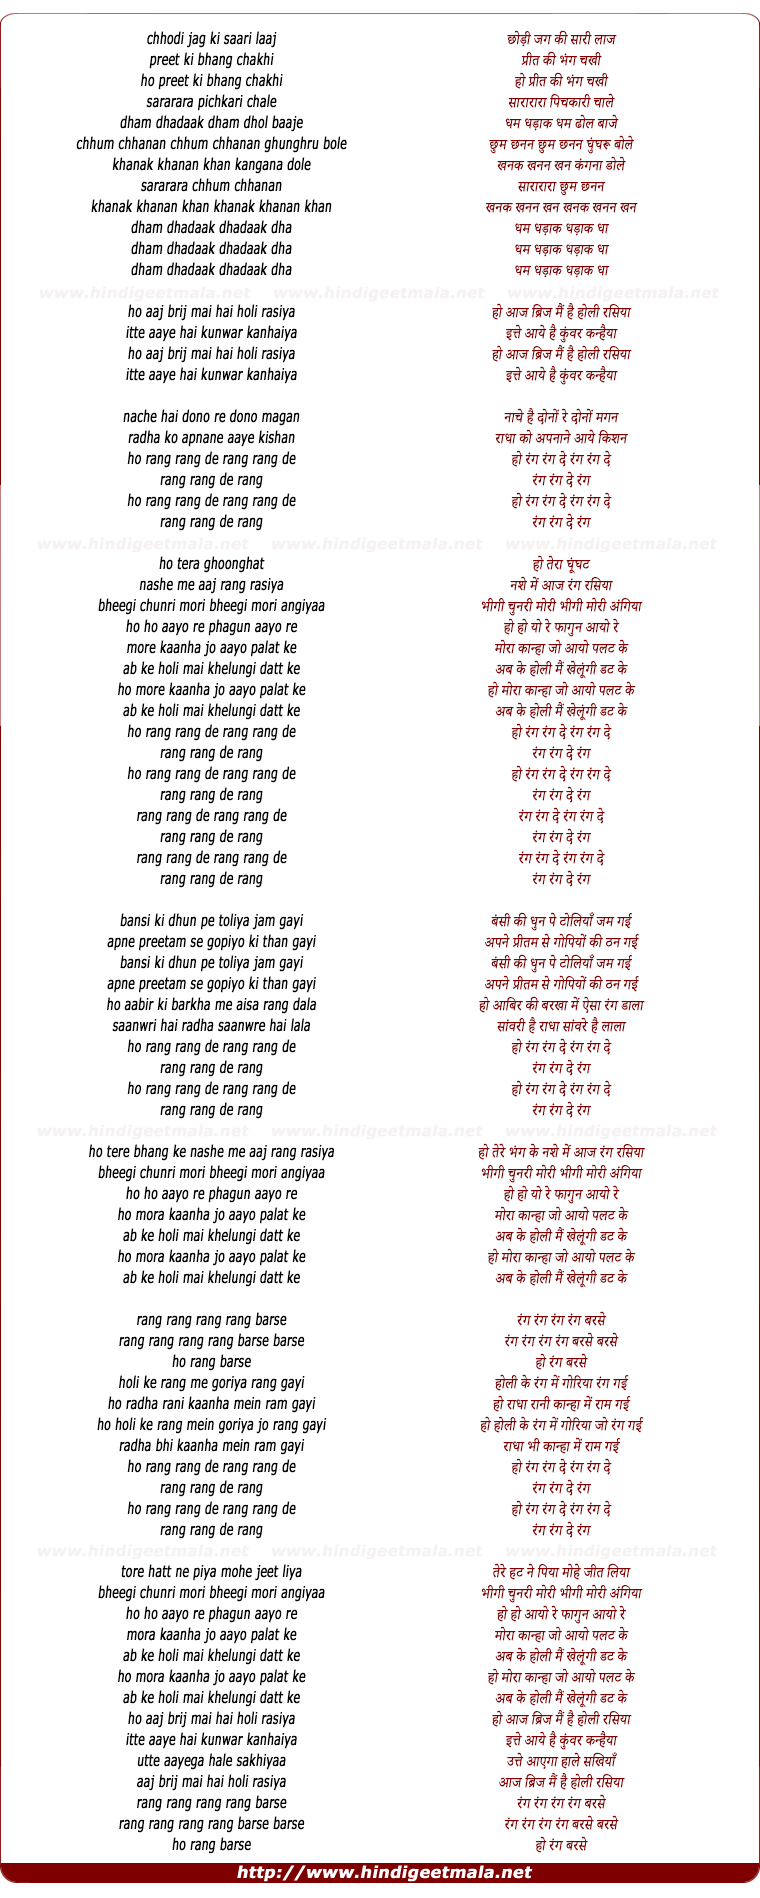 lyrics of song More Kaanha Jo Aaye Palat Ke (Rang Rang De)